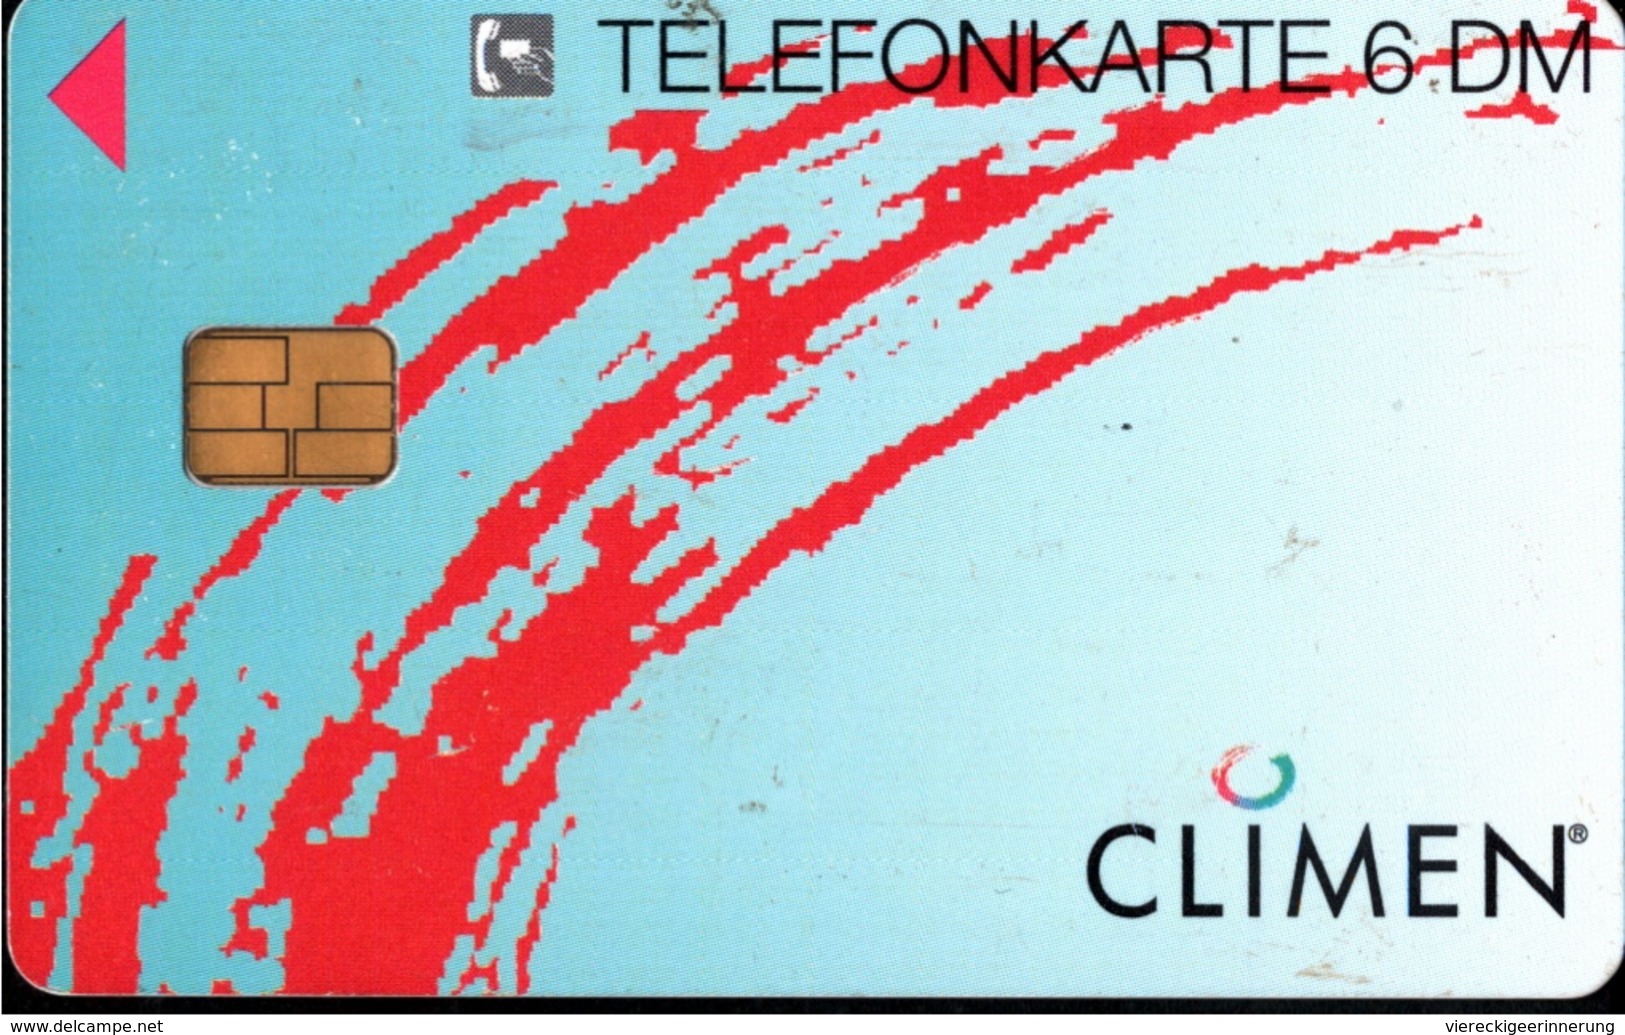 ! Telefonkarte, Telecarte, Phonecard, 1996, O799, Auflage 3000, Schering, Climen, Germany - O-Series : Series Clientes Excluidos Servicio De Colección